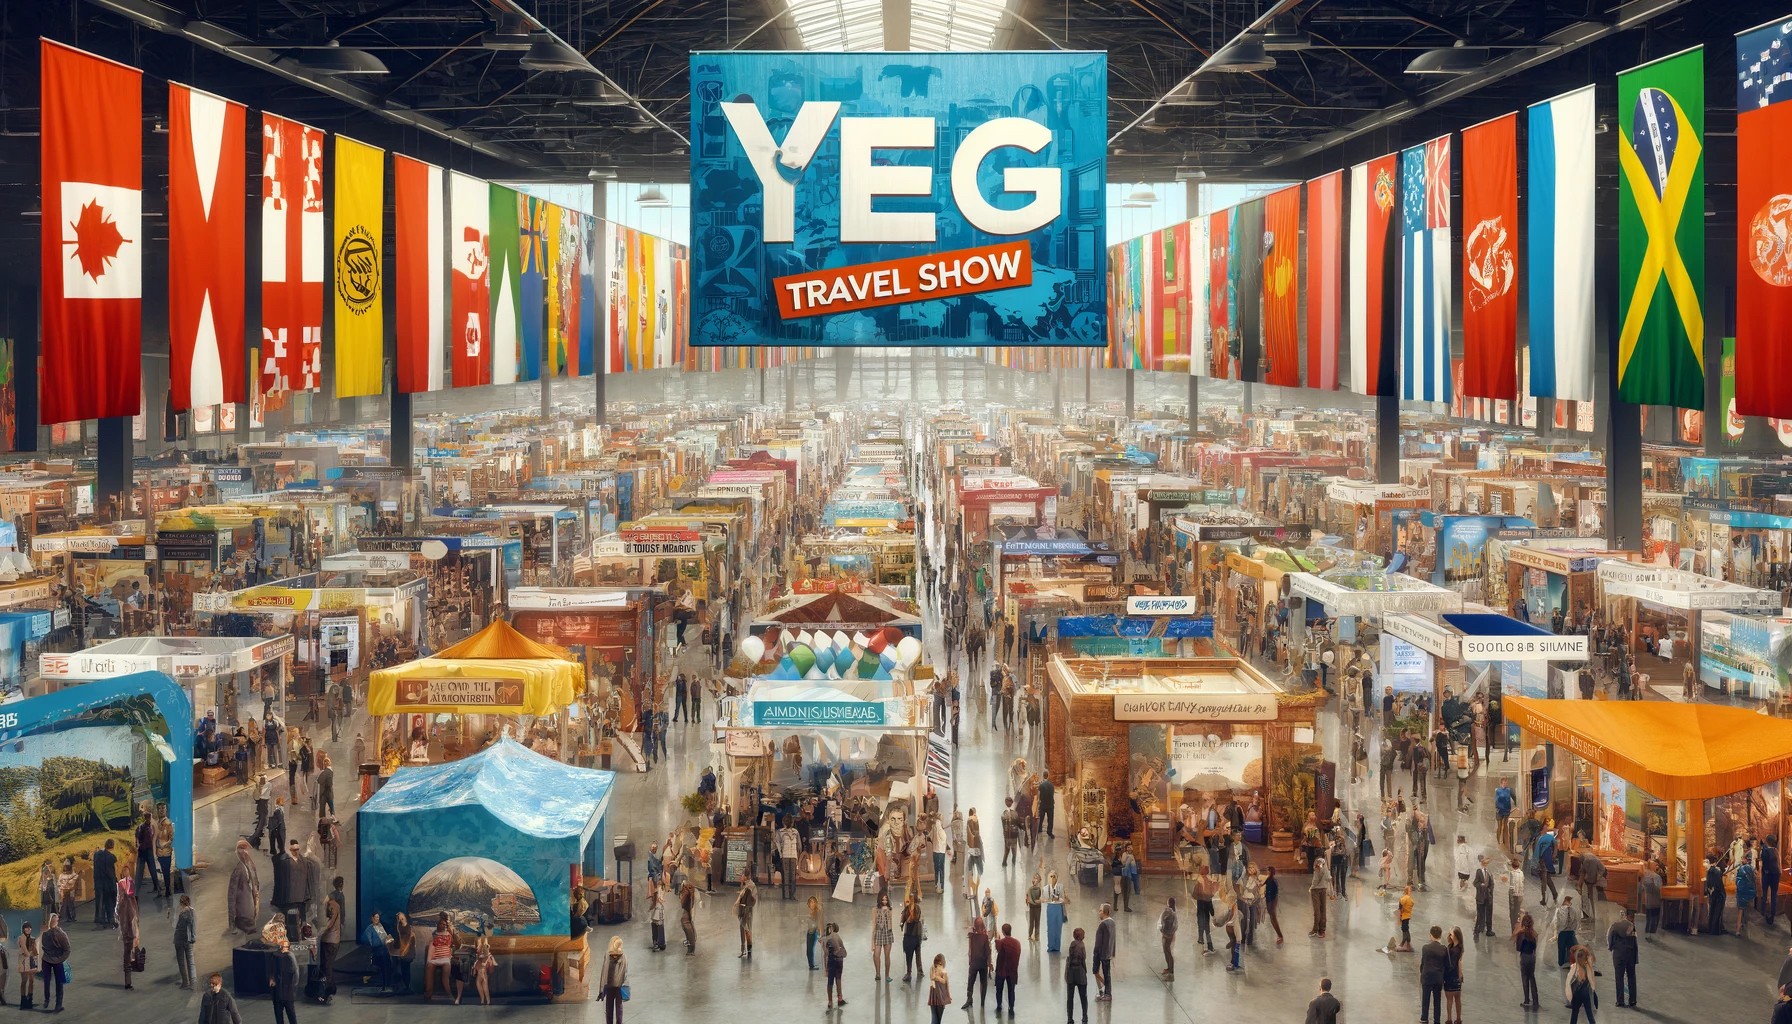 The YEG Travel Show